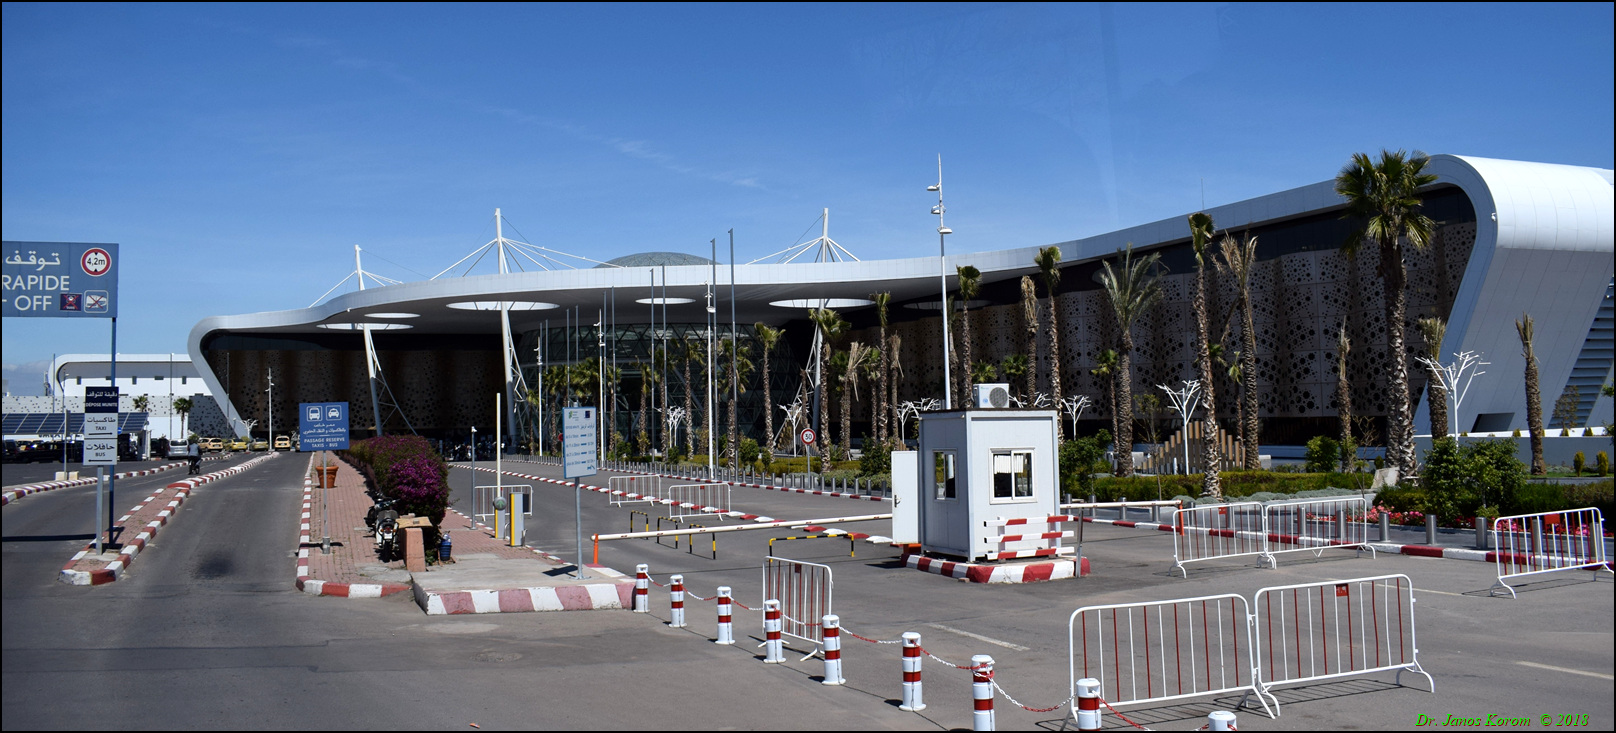 Aeroport Marrakech Menara 86DSC 0598 (41932189000)